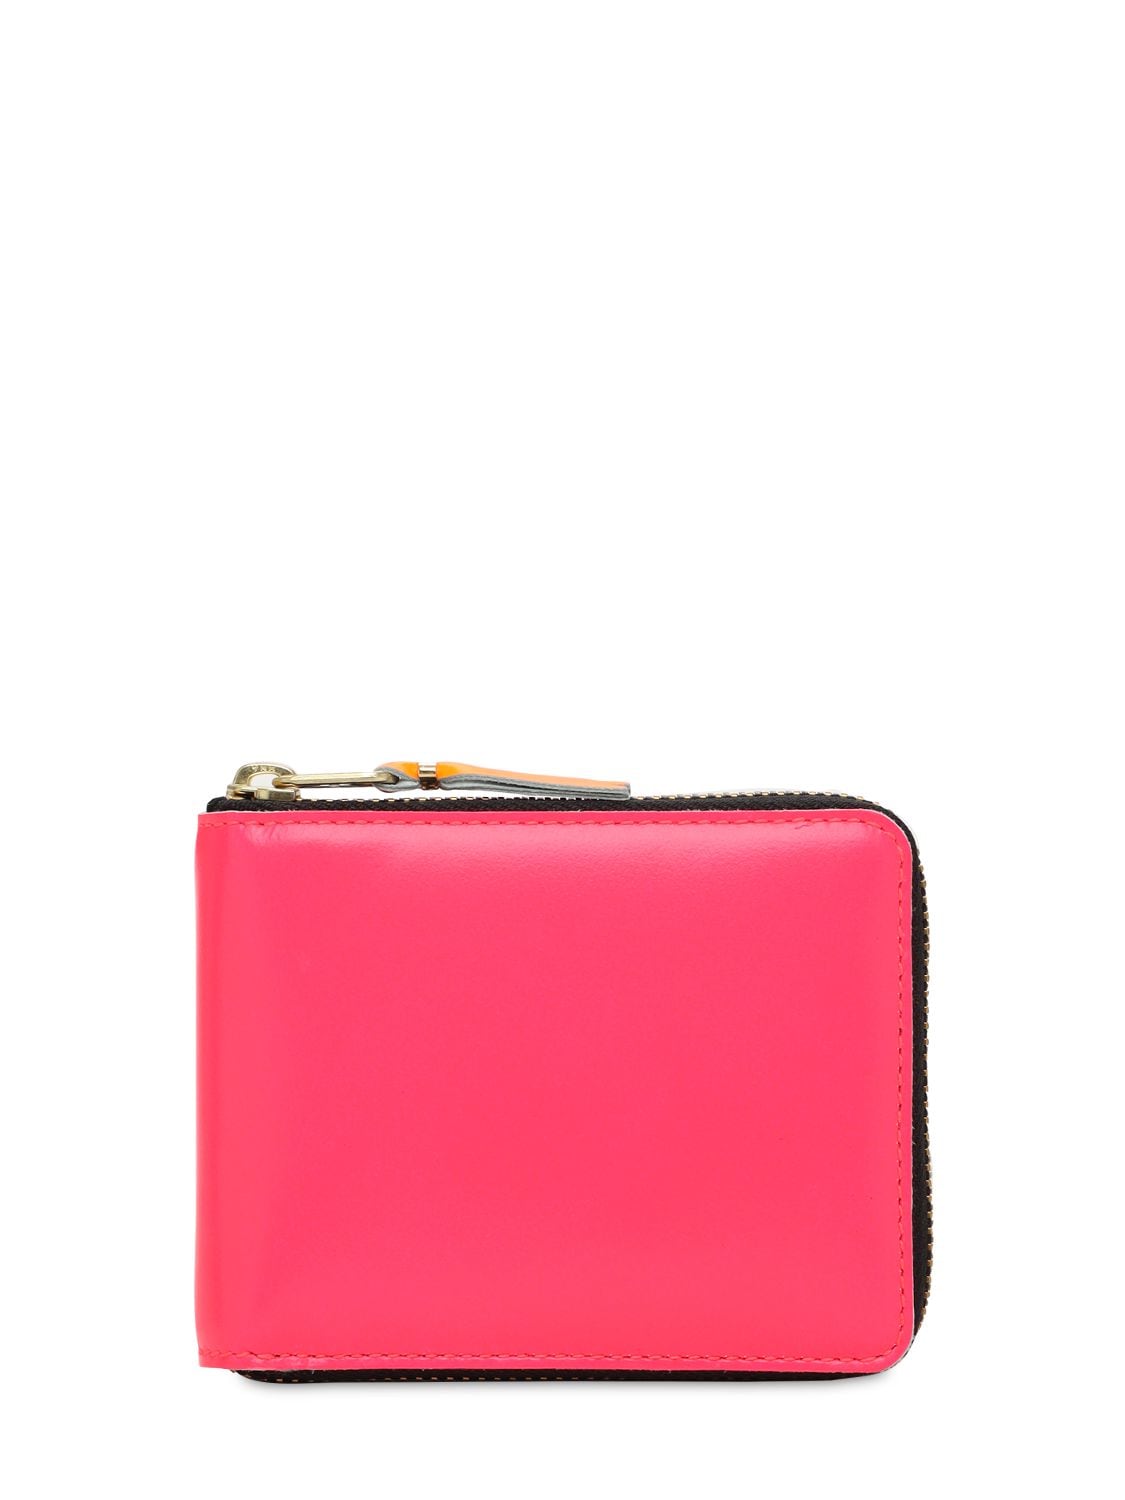 Comme Des Garçons Super Fluo Leather Zip-around Wallet In Pink